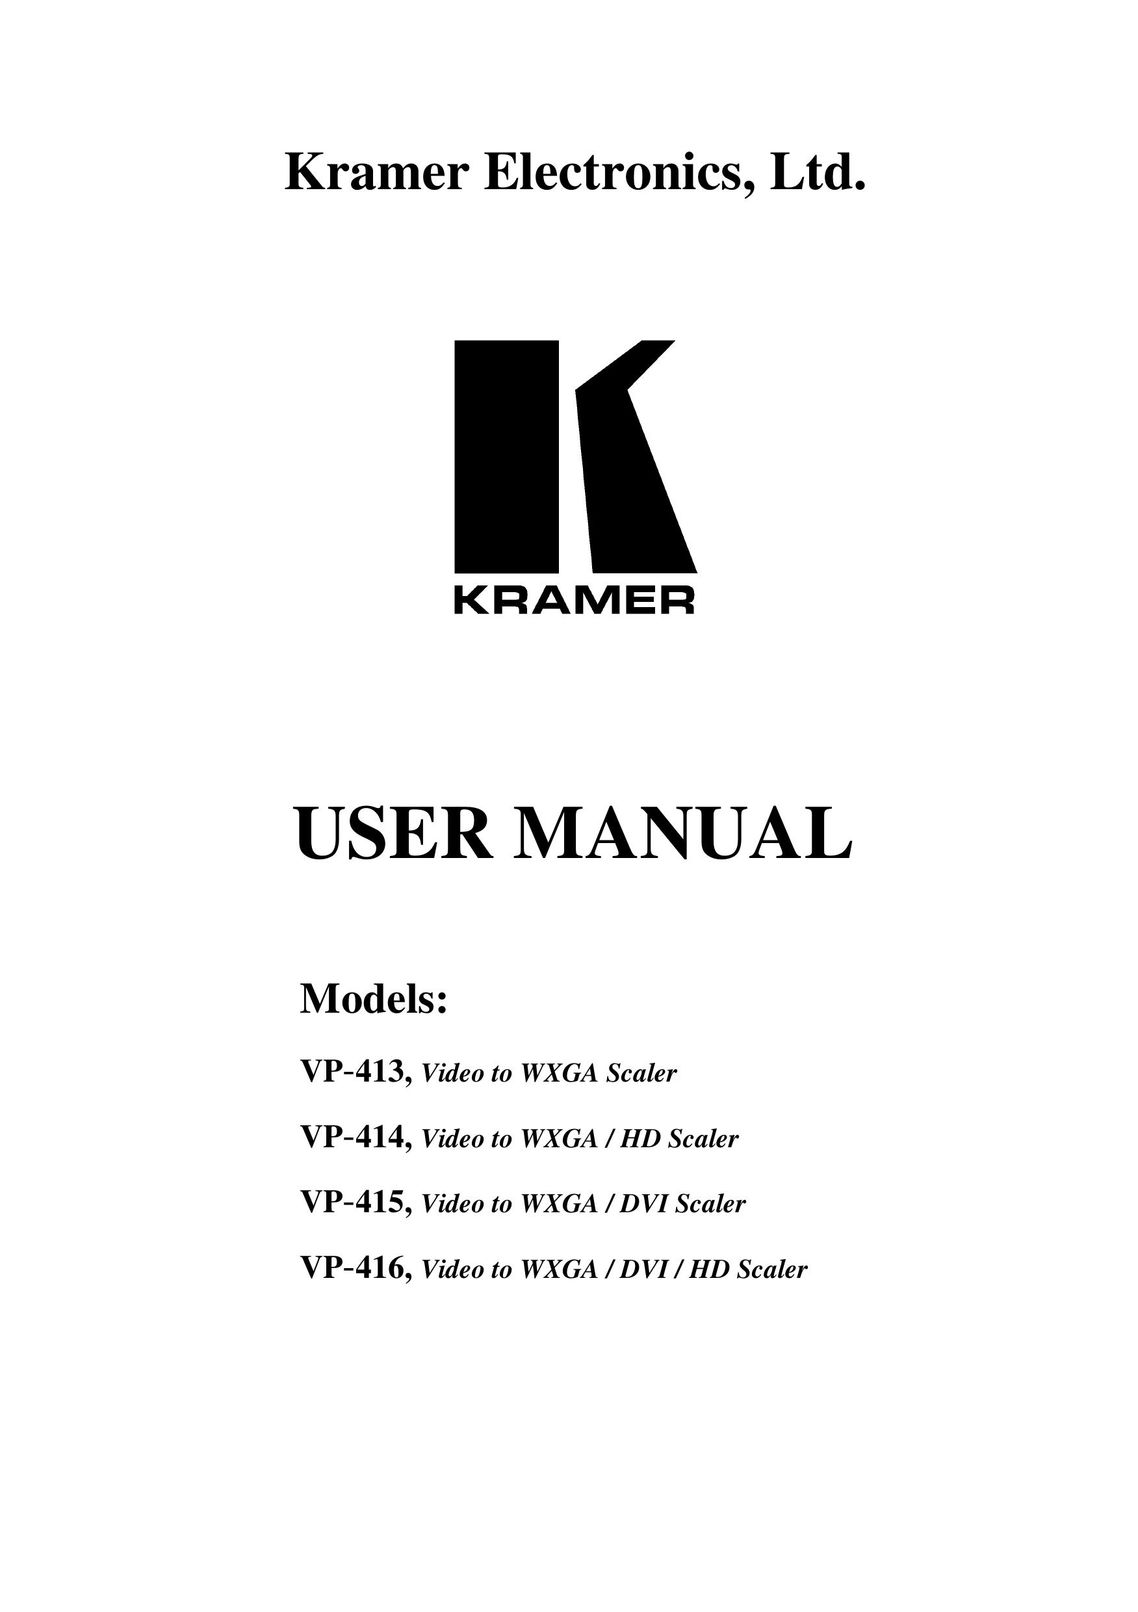 Kramer Electronics VP-415 TV Video Accessories User Manual